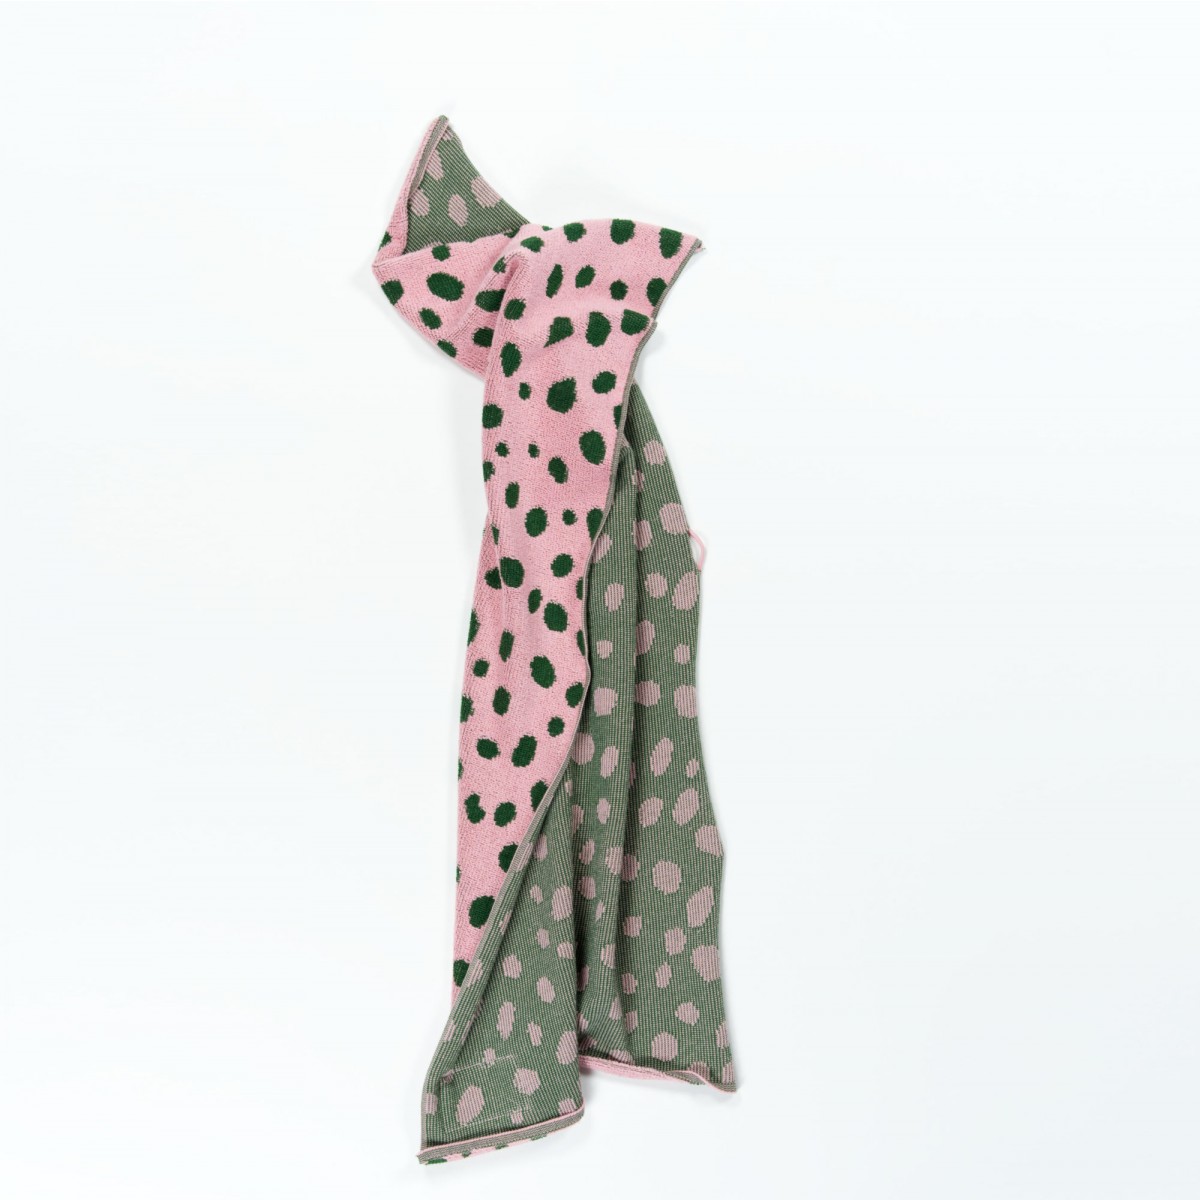 Towel.Studio | Pebbles Handtuch | Pink & Green